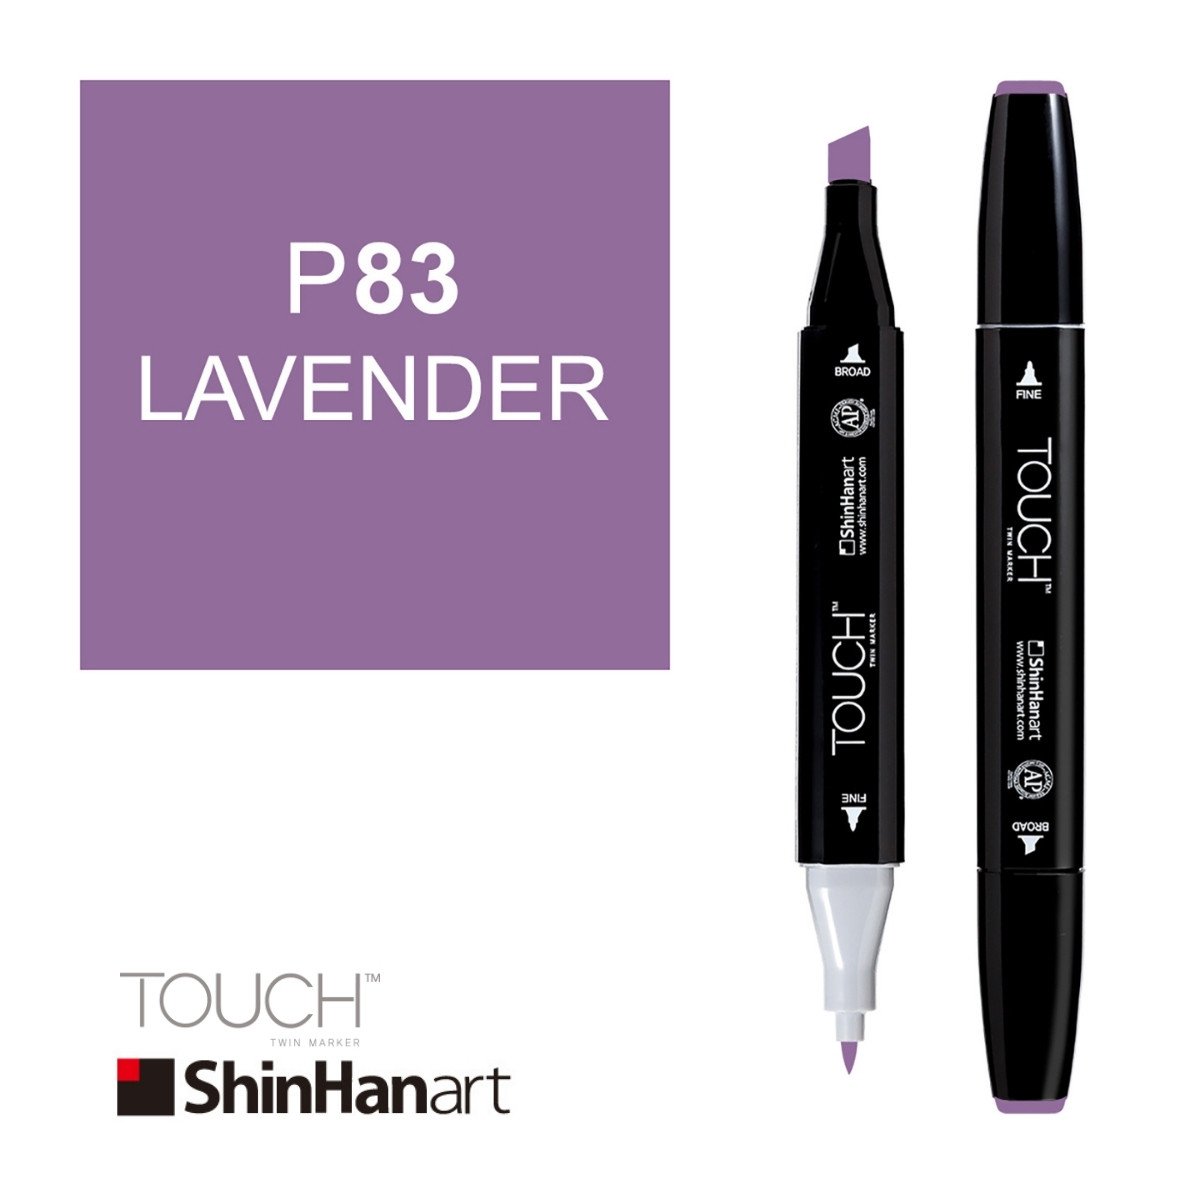 ShinHan Art Touch Twin Marker P83 Lavender